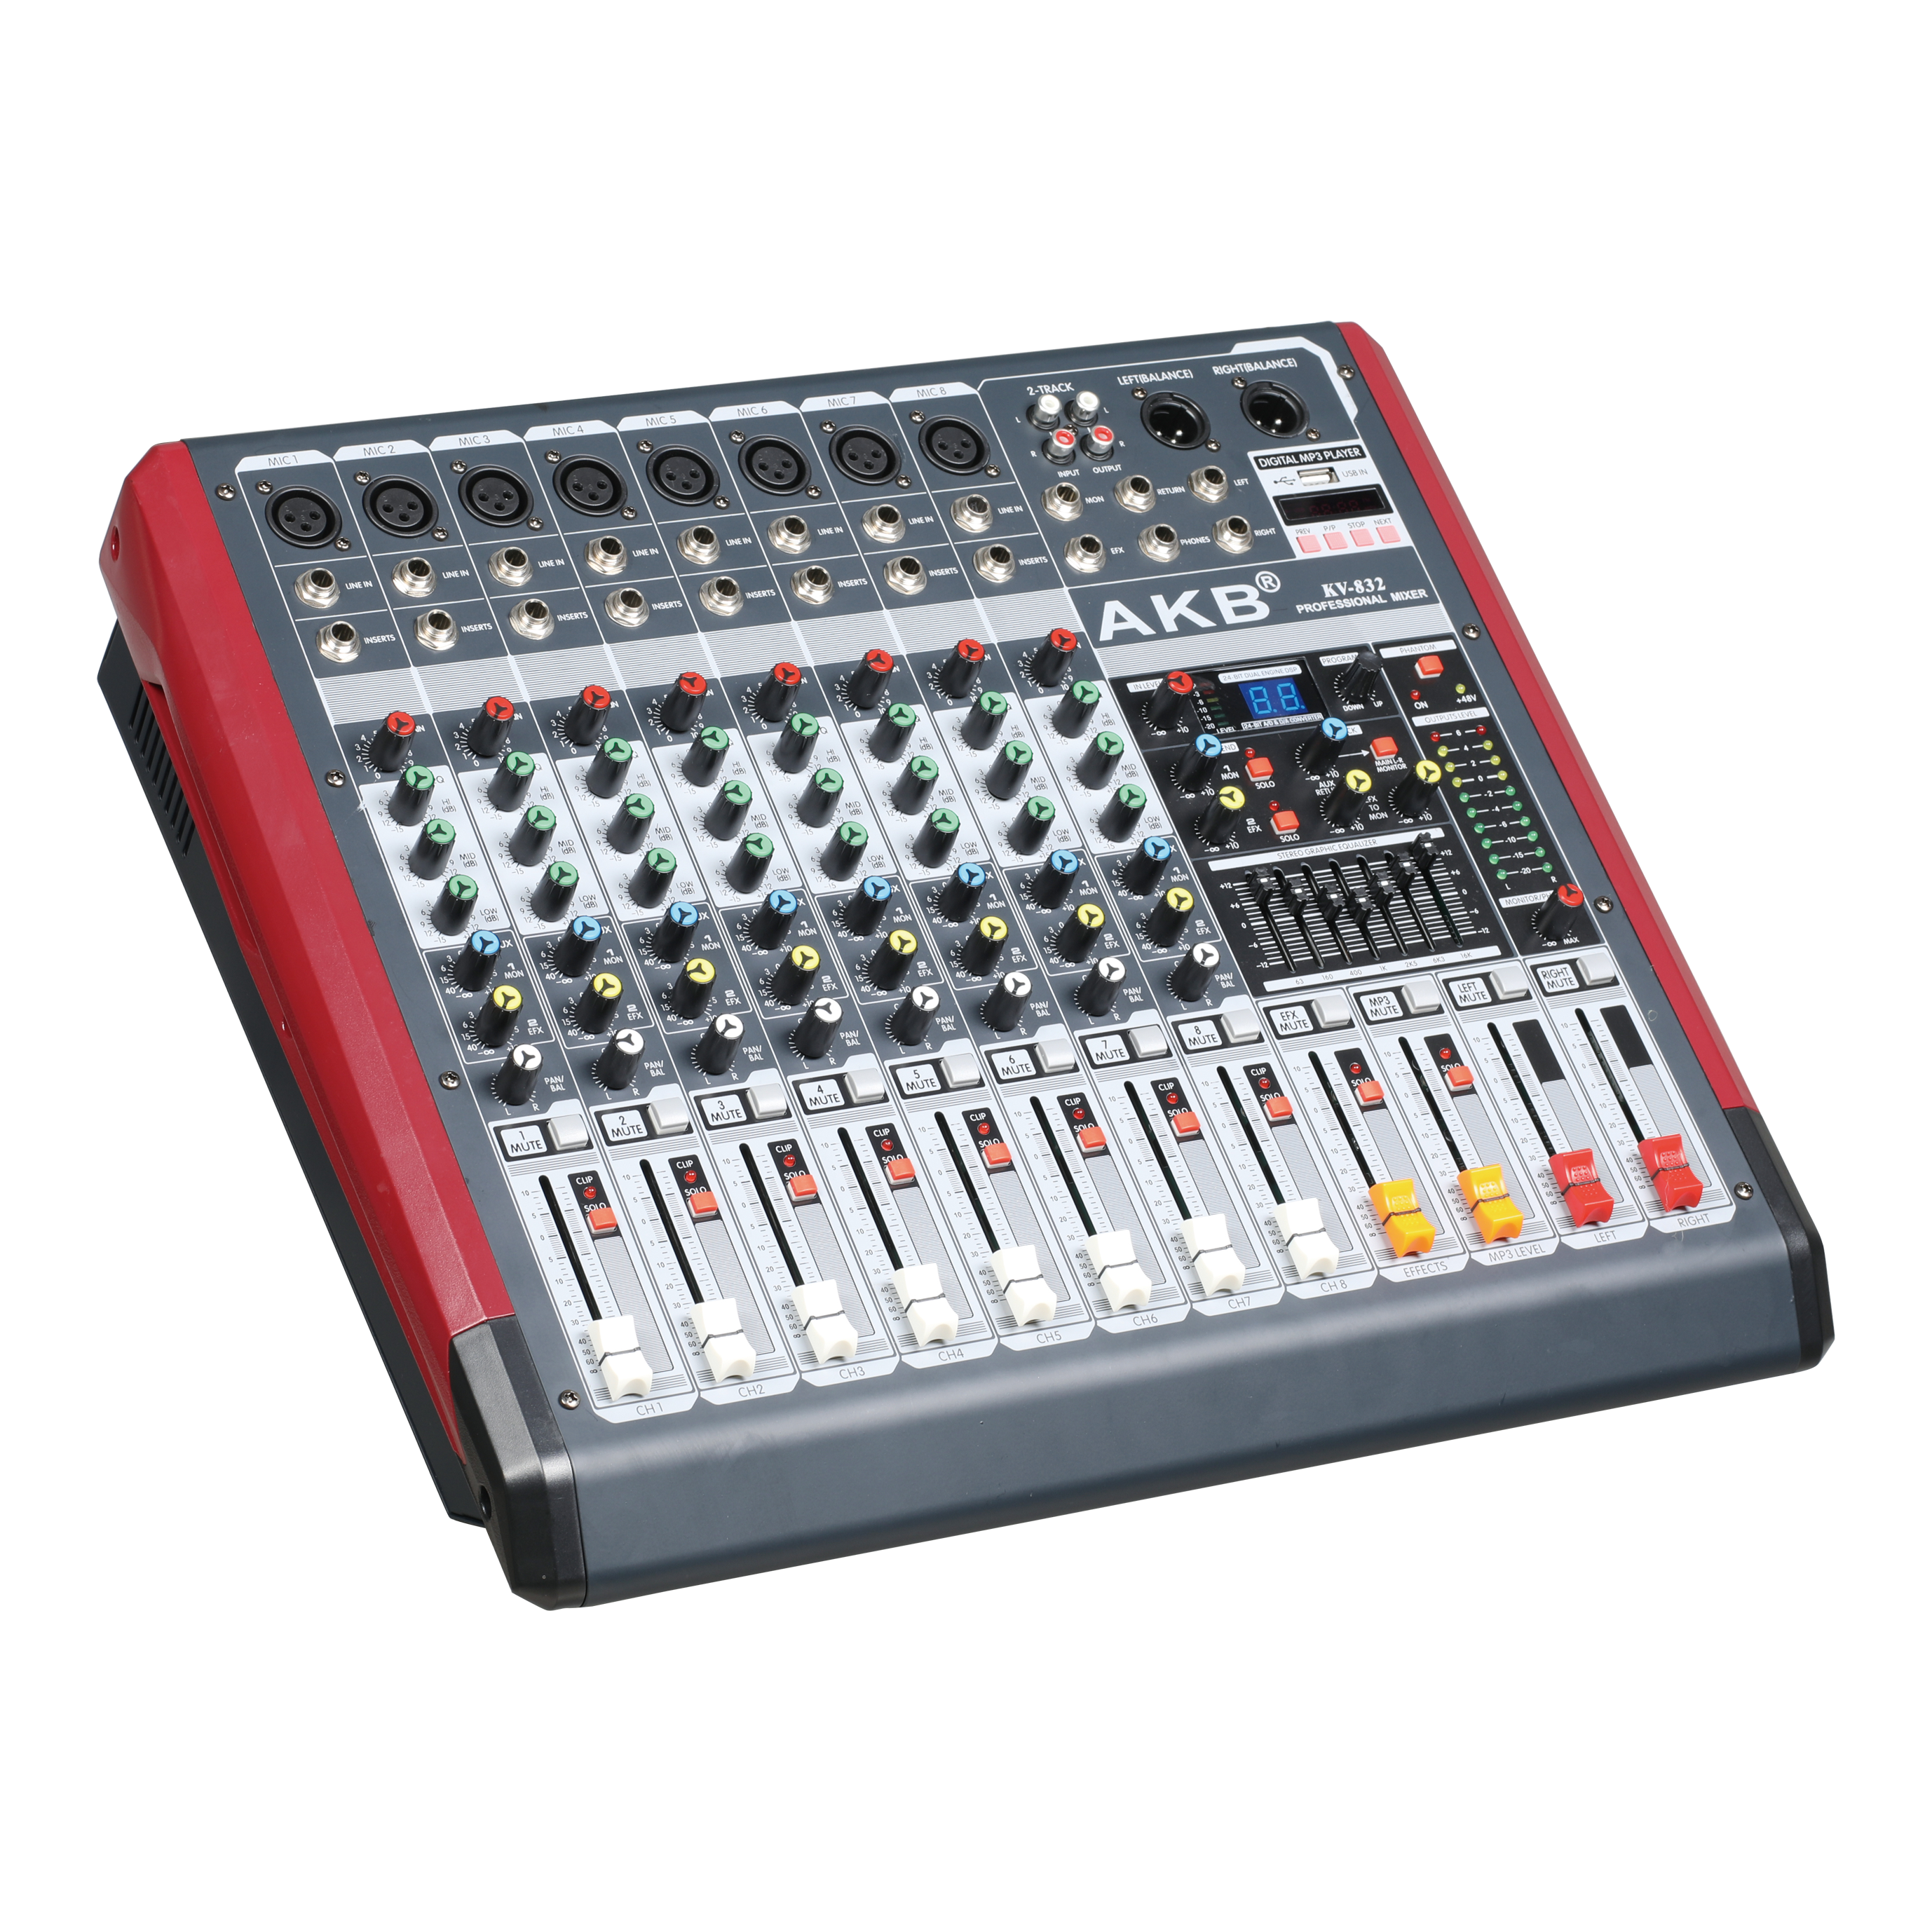 KV-832 8 channel sound mixer